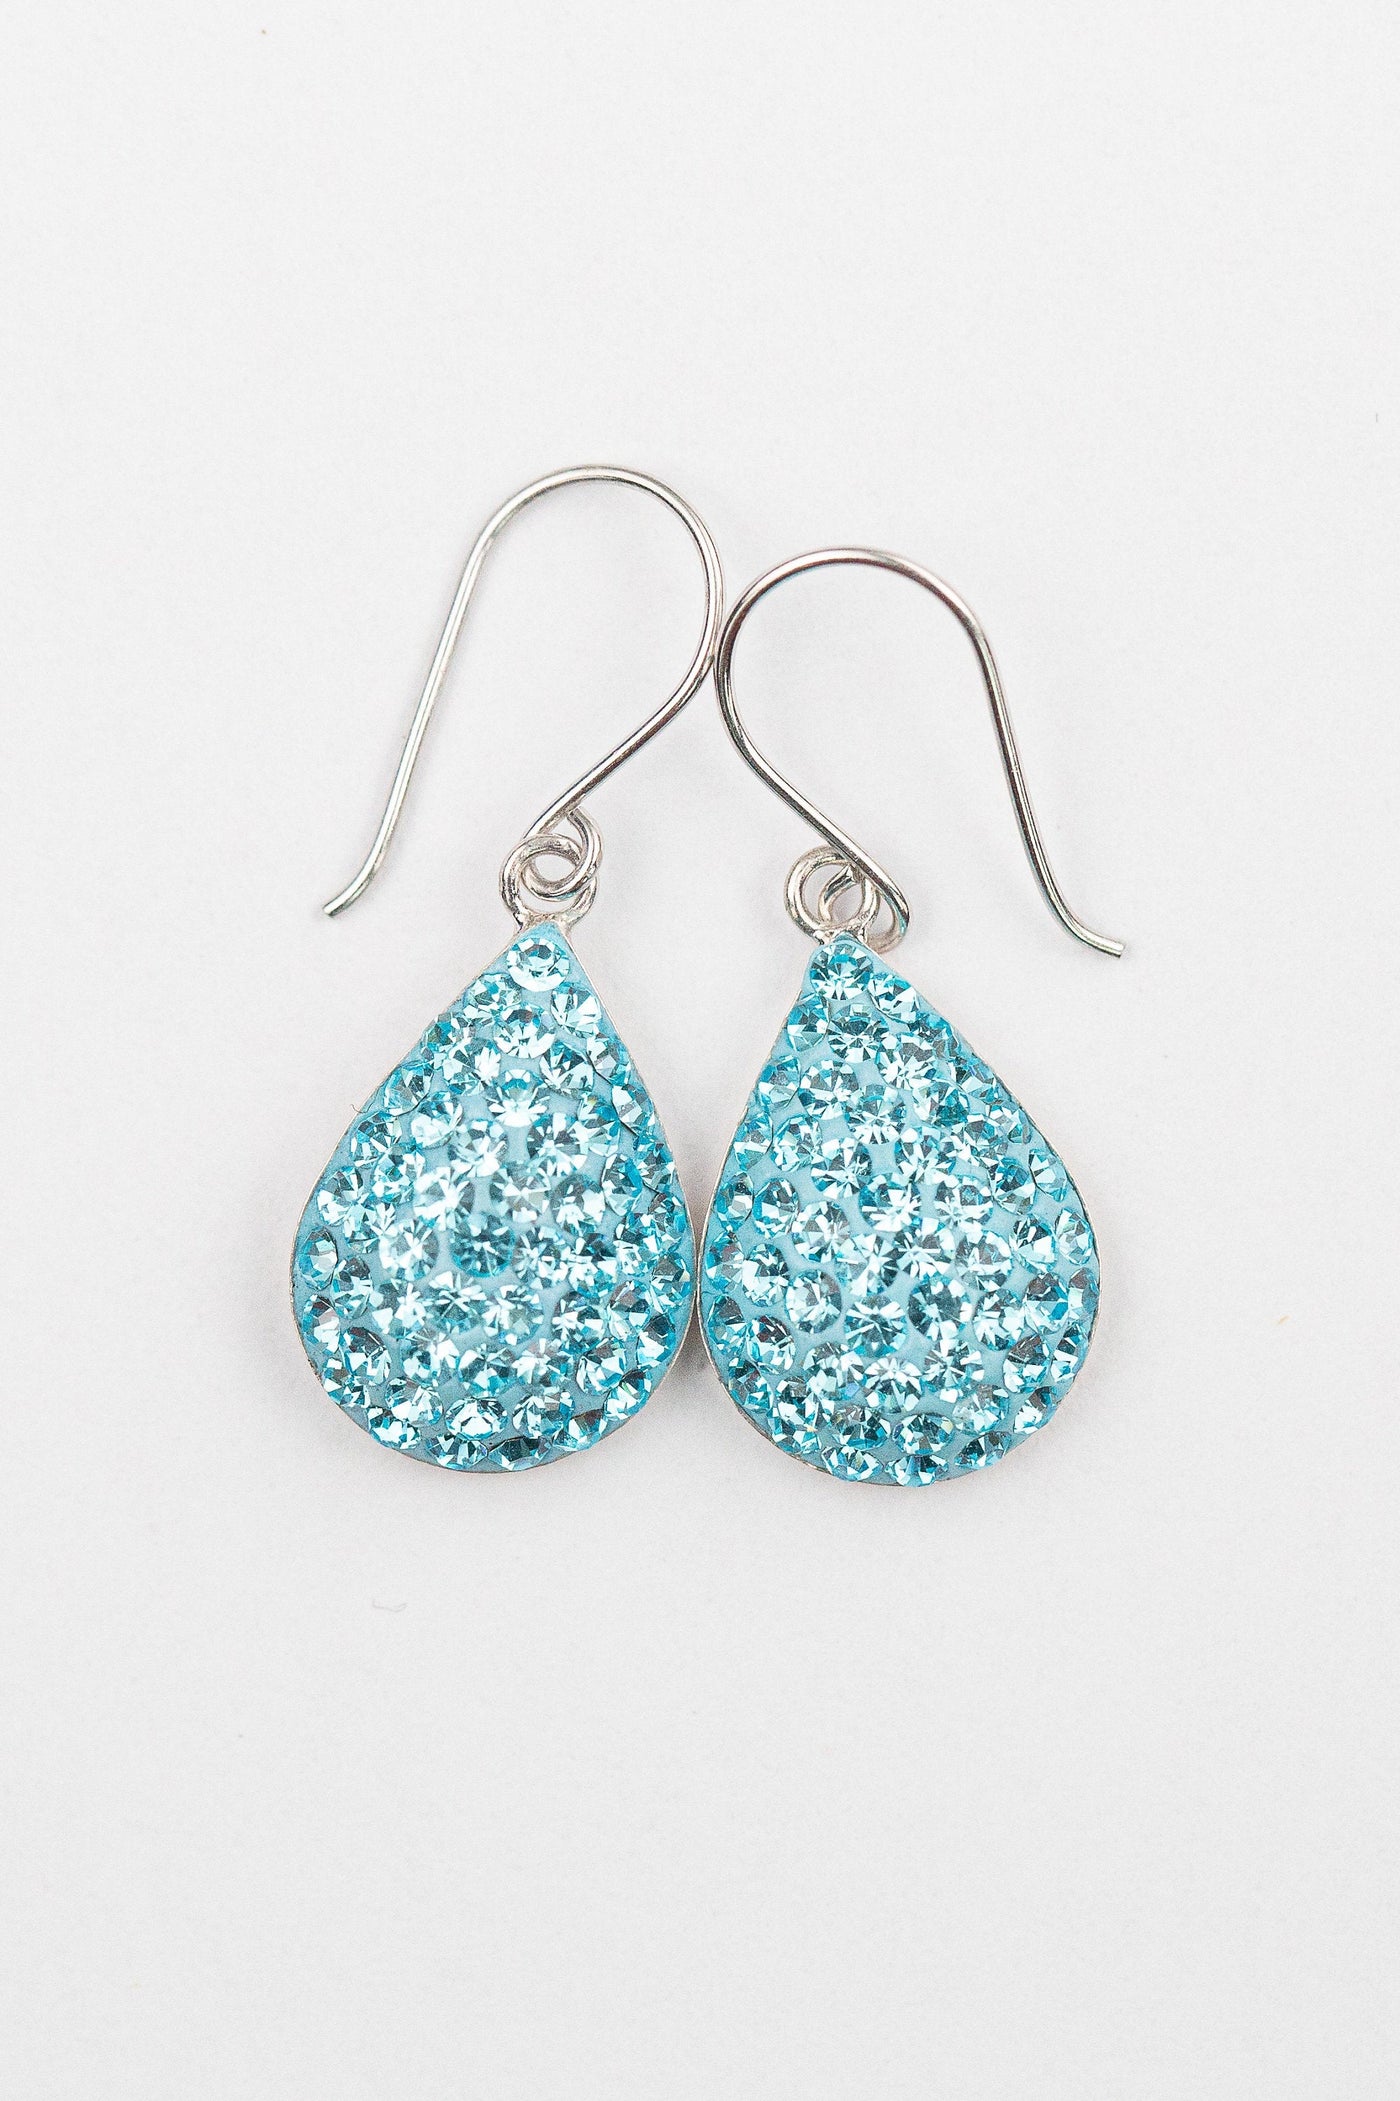 Swarovski Crystal Round Teardrop Silver Earrings in Aquamarine | Annie and Sisters